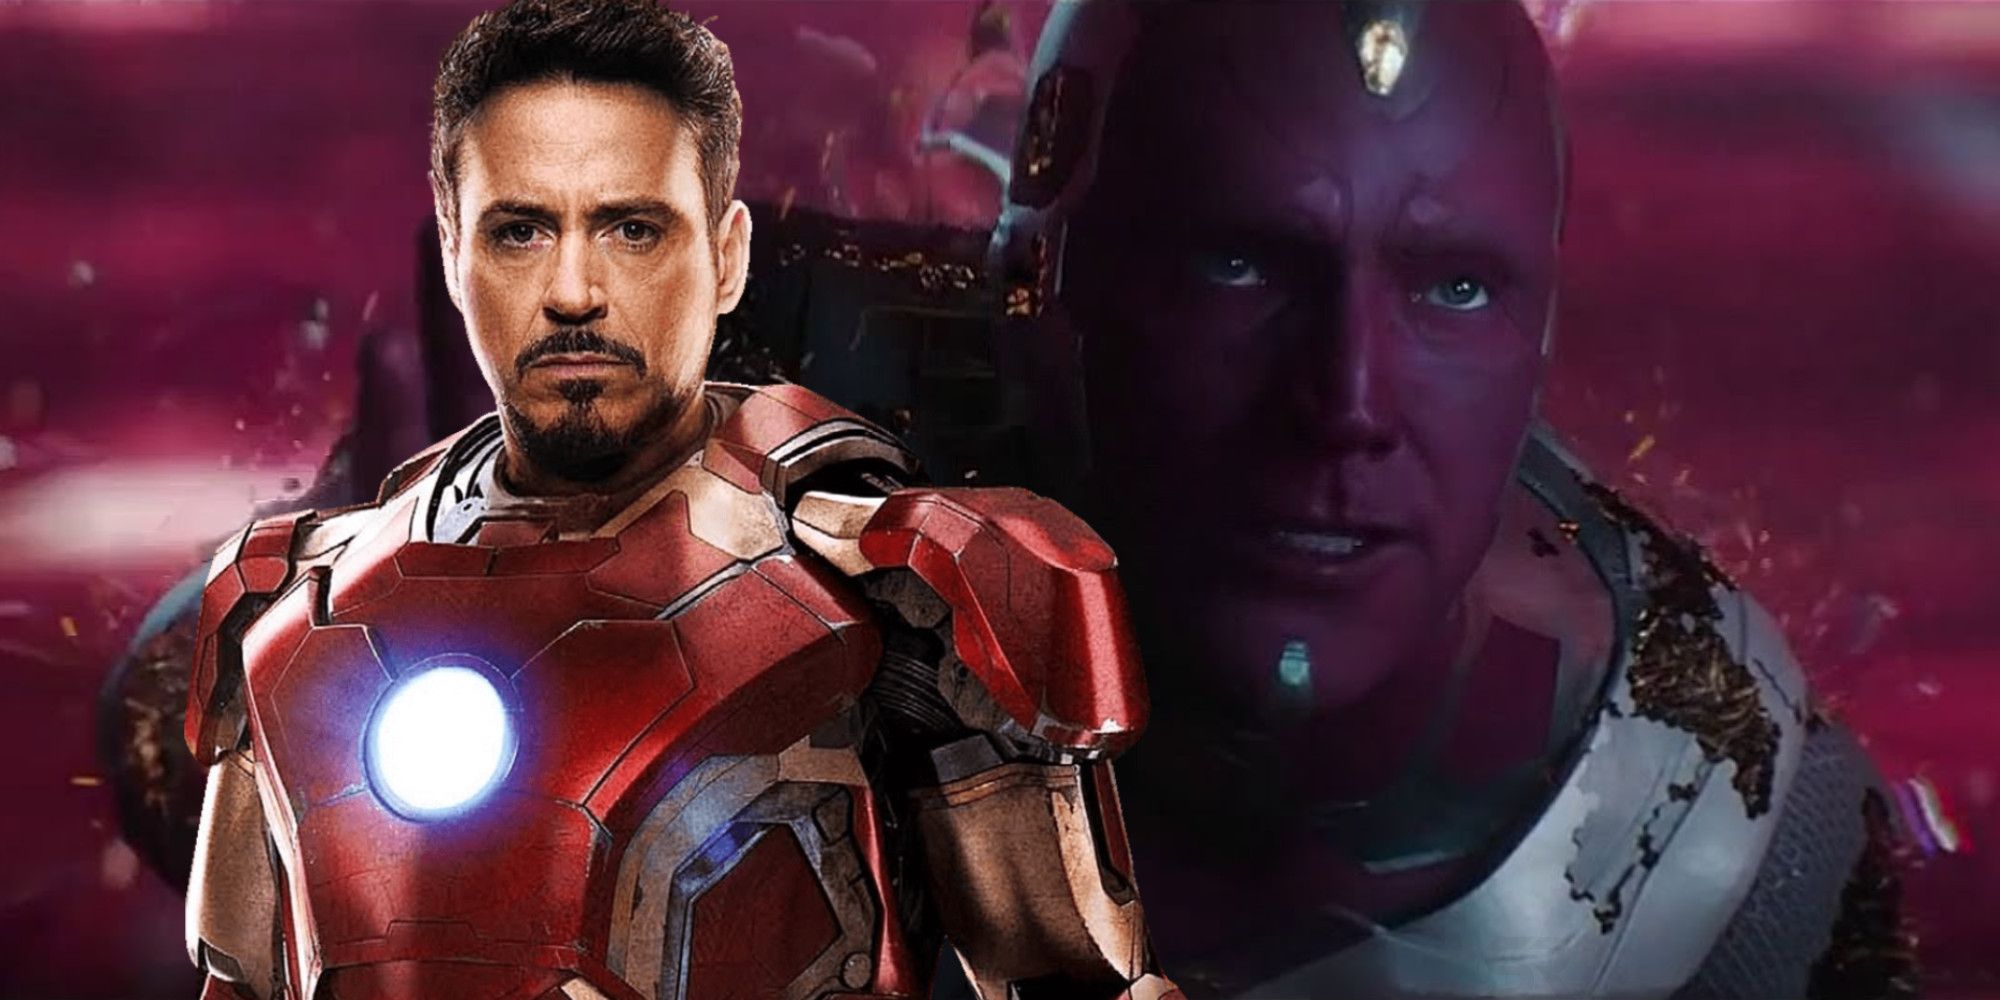 Paul Bettany as Vision Robert Downey Jr as Tony Stark Iron Man WandaVision